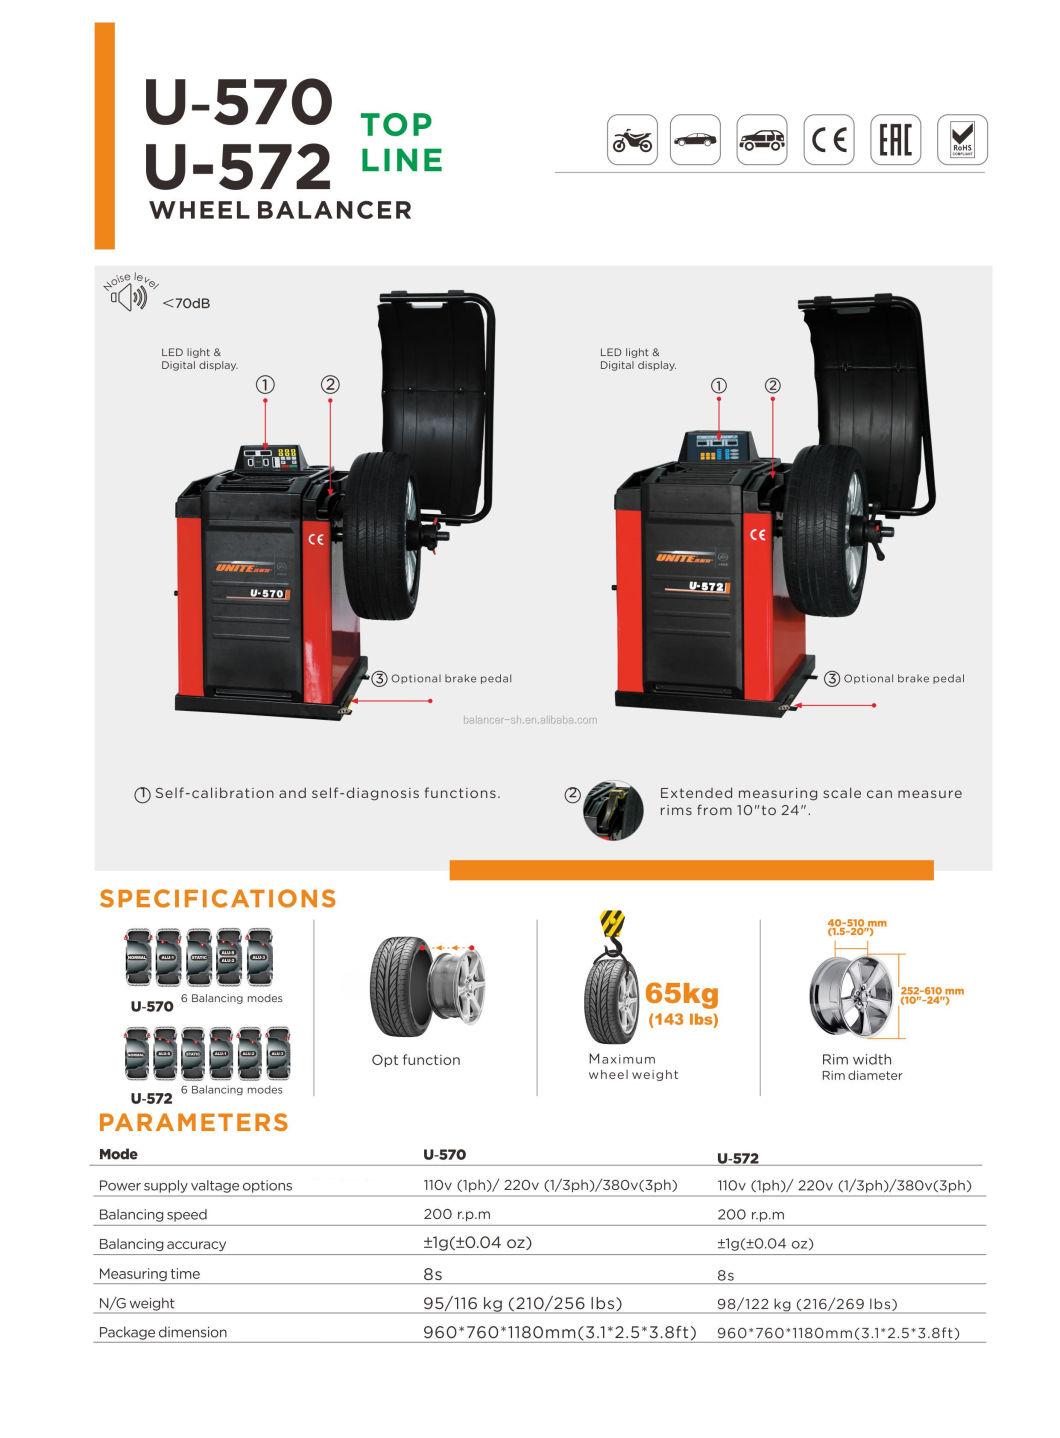 Unite High Class Wheel Balancing Equipment for Vehicle Repair Workshop Wheel Balancer U-572